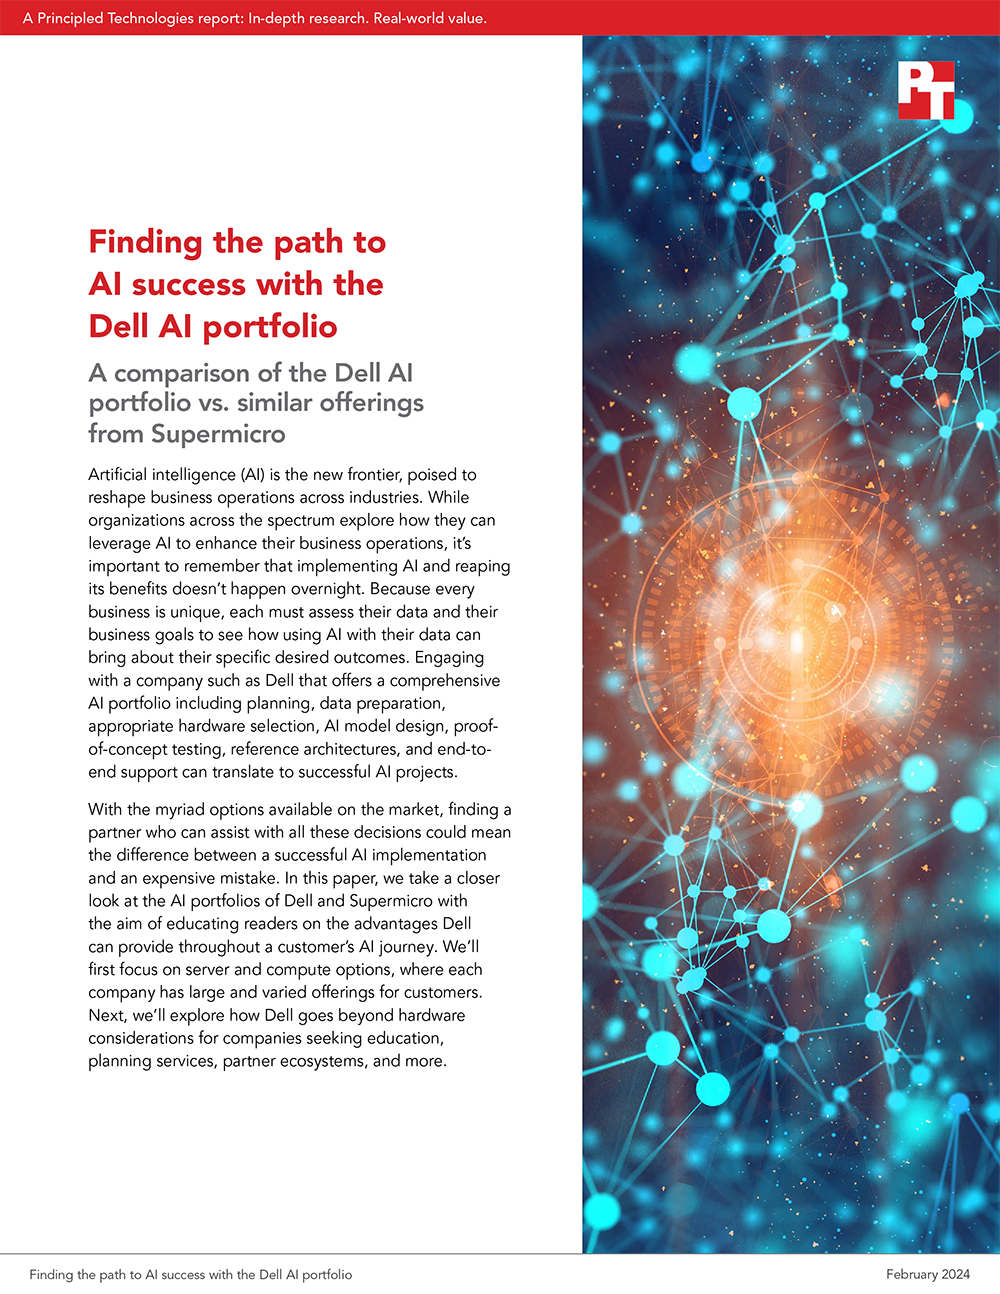 Finding the path to AI success with the Dell AI portfolio